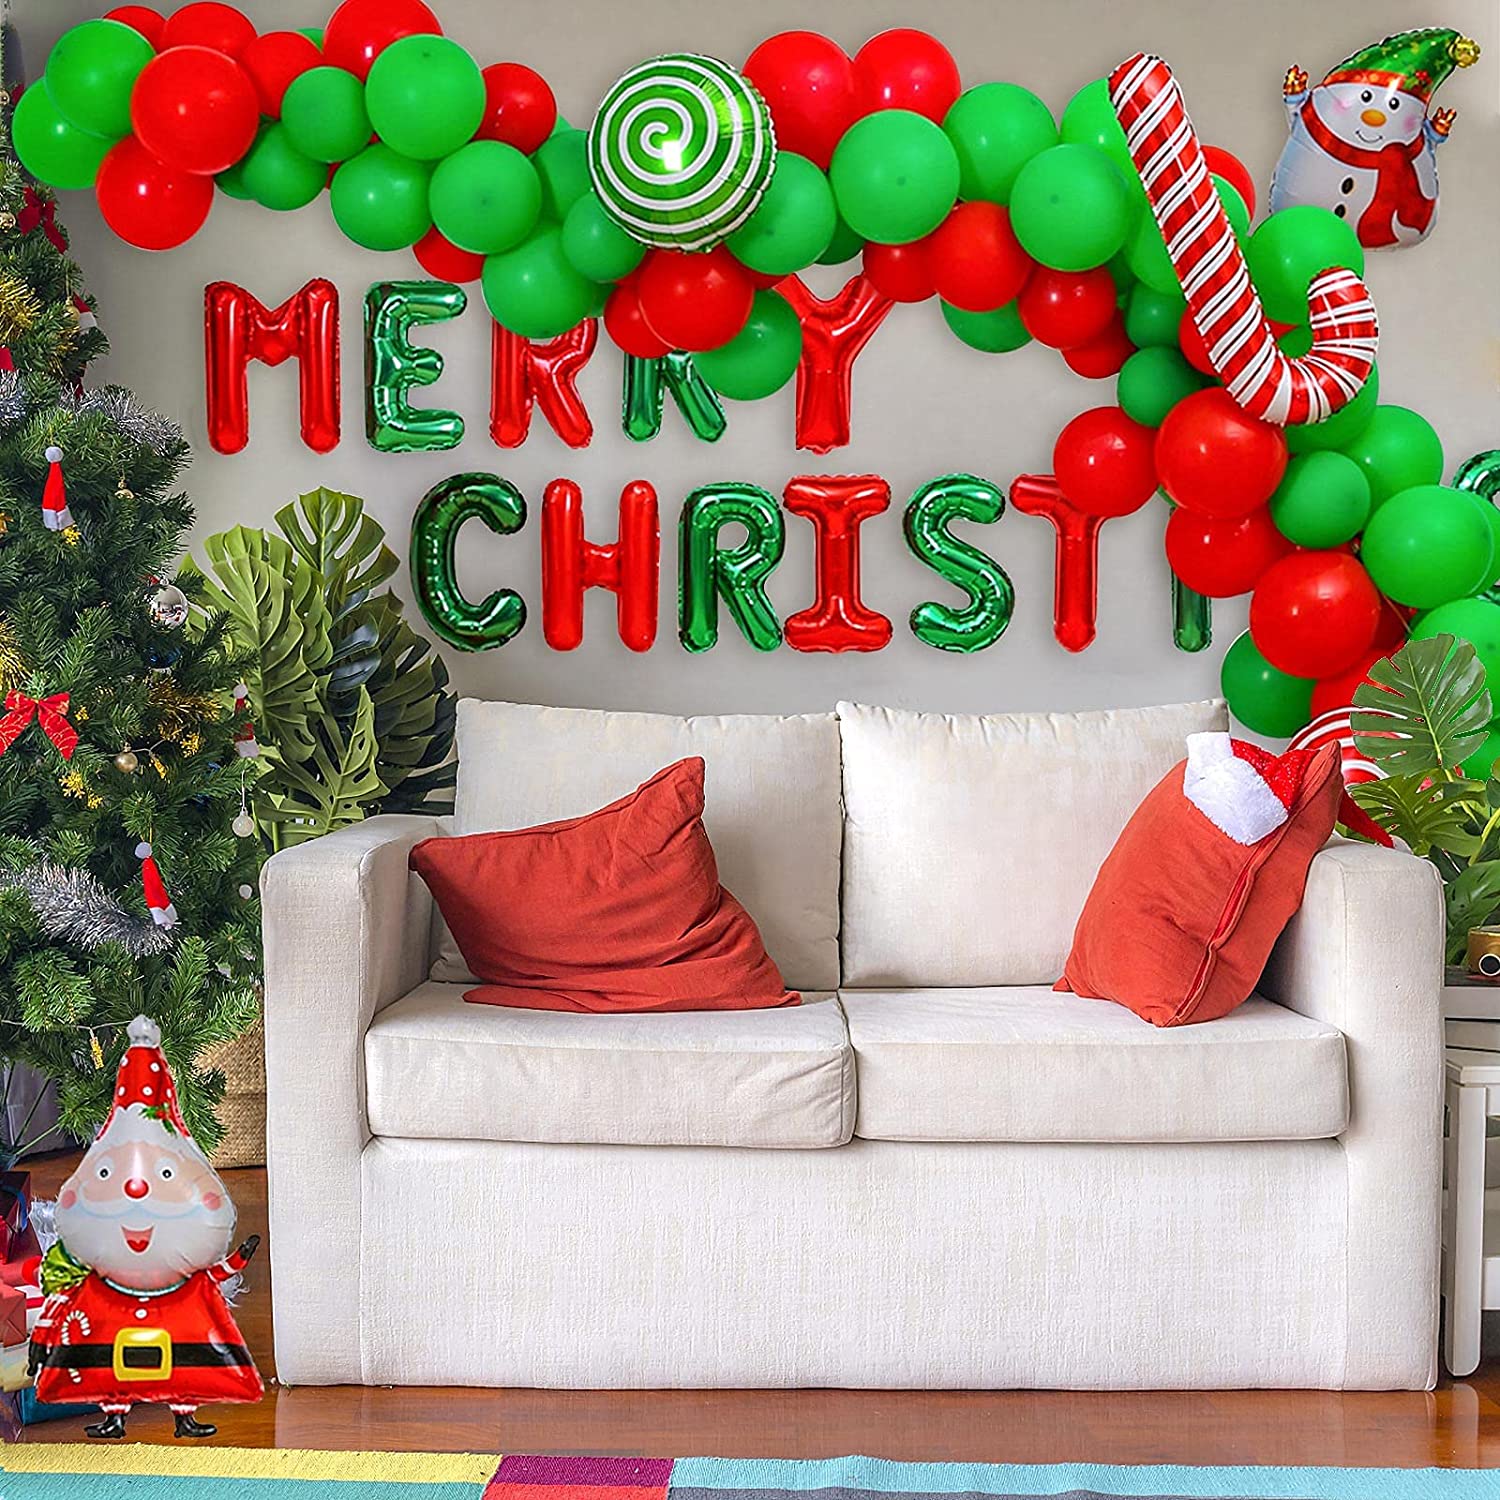 Christmas party balloon decoration ideas – TogetherV Blog